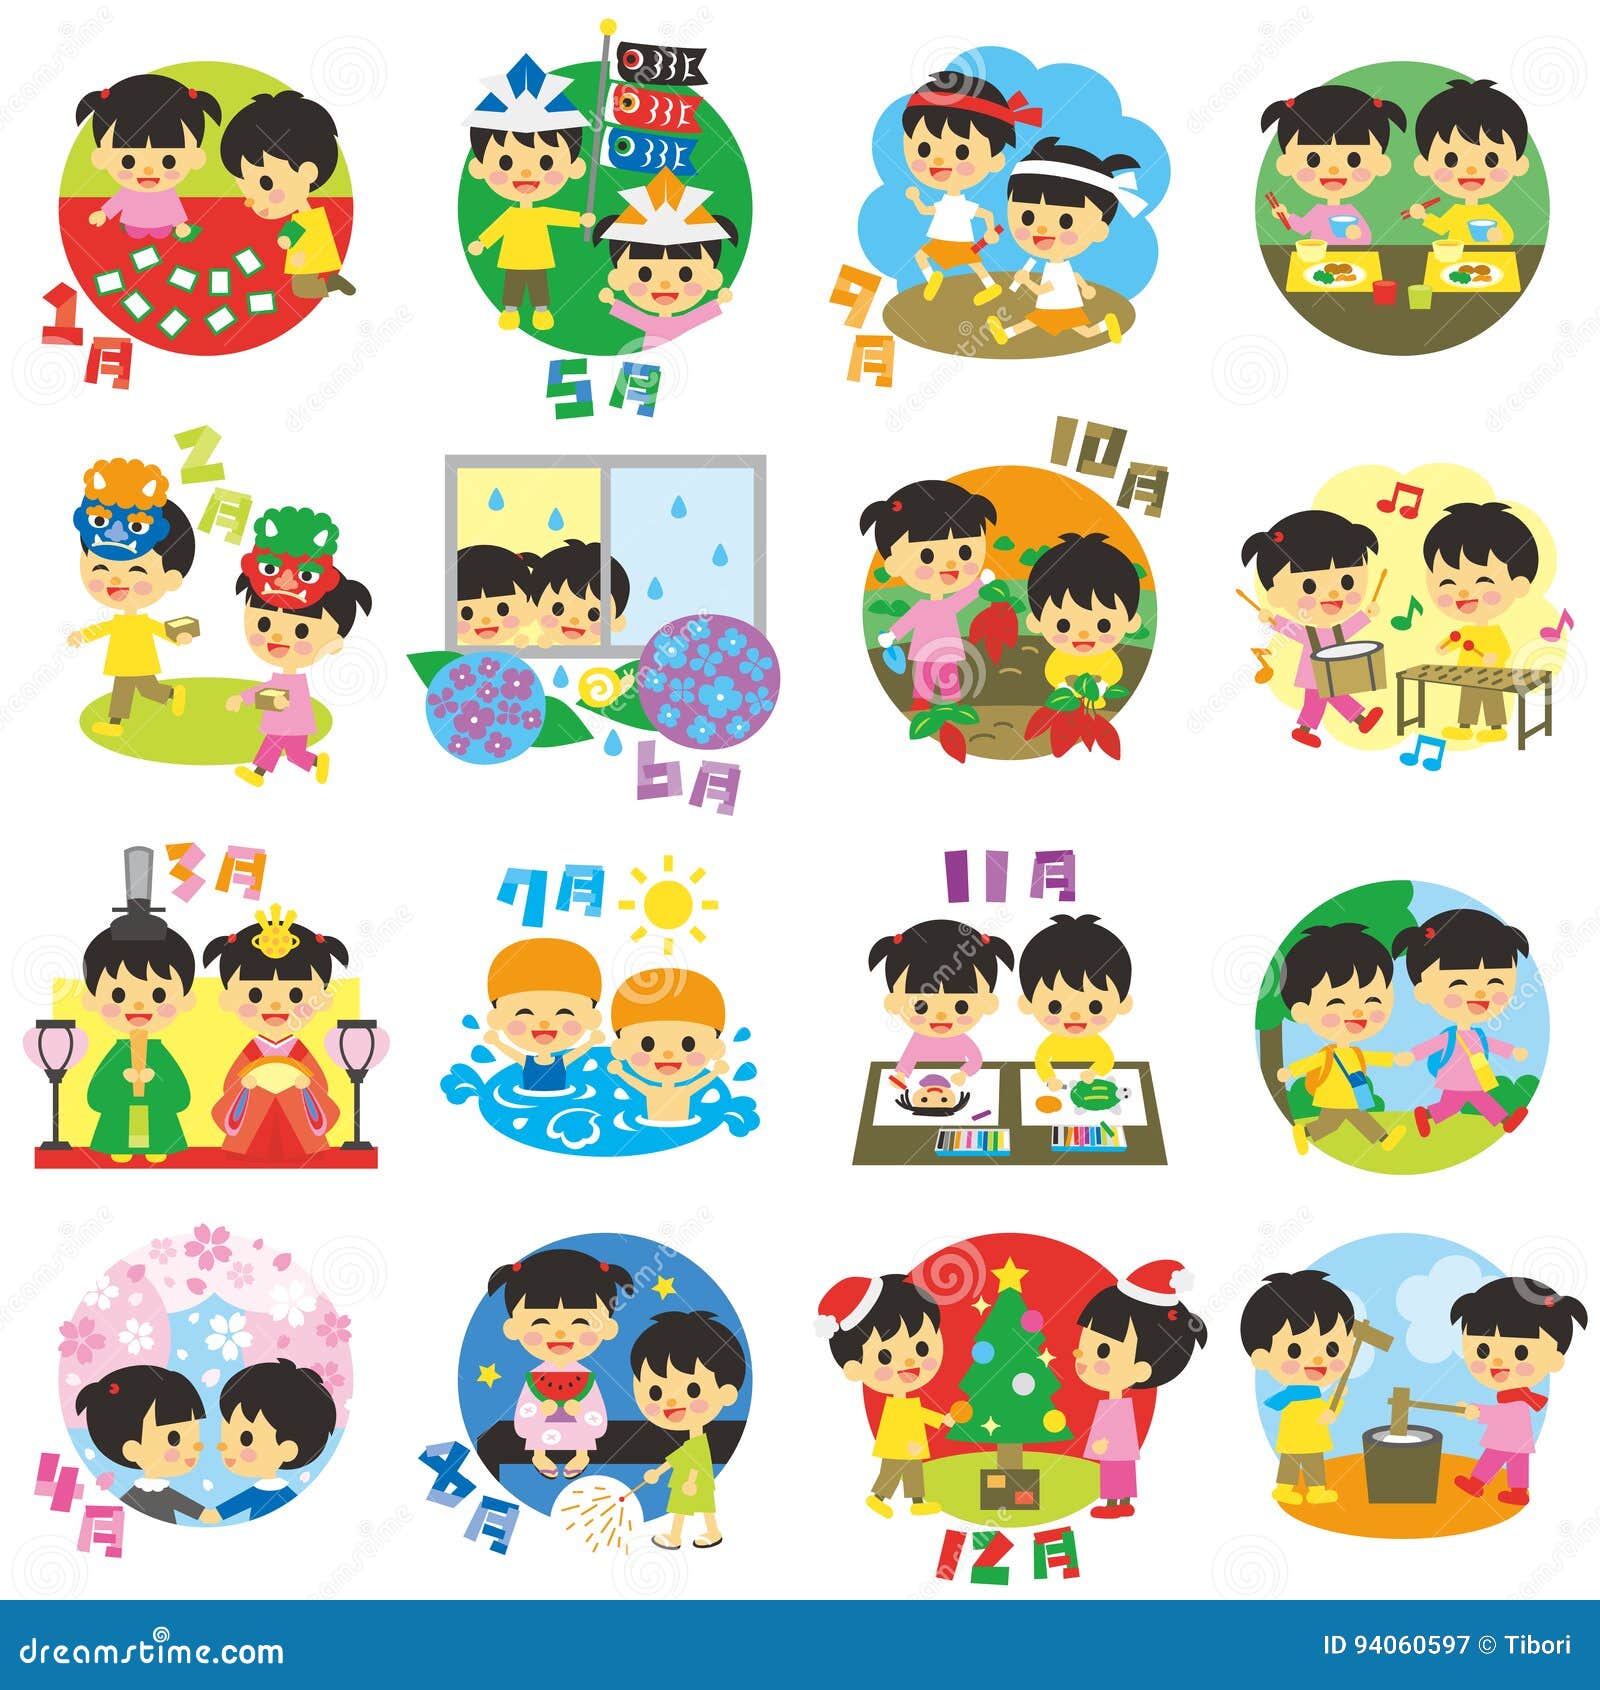 Seasonal Events Calendar in Japan, Kids Stock Vector Illustration of